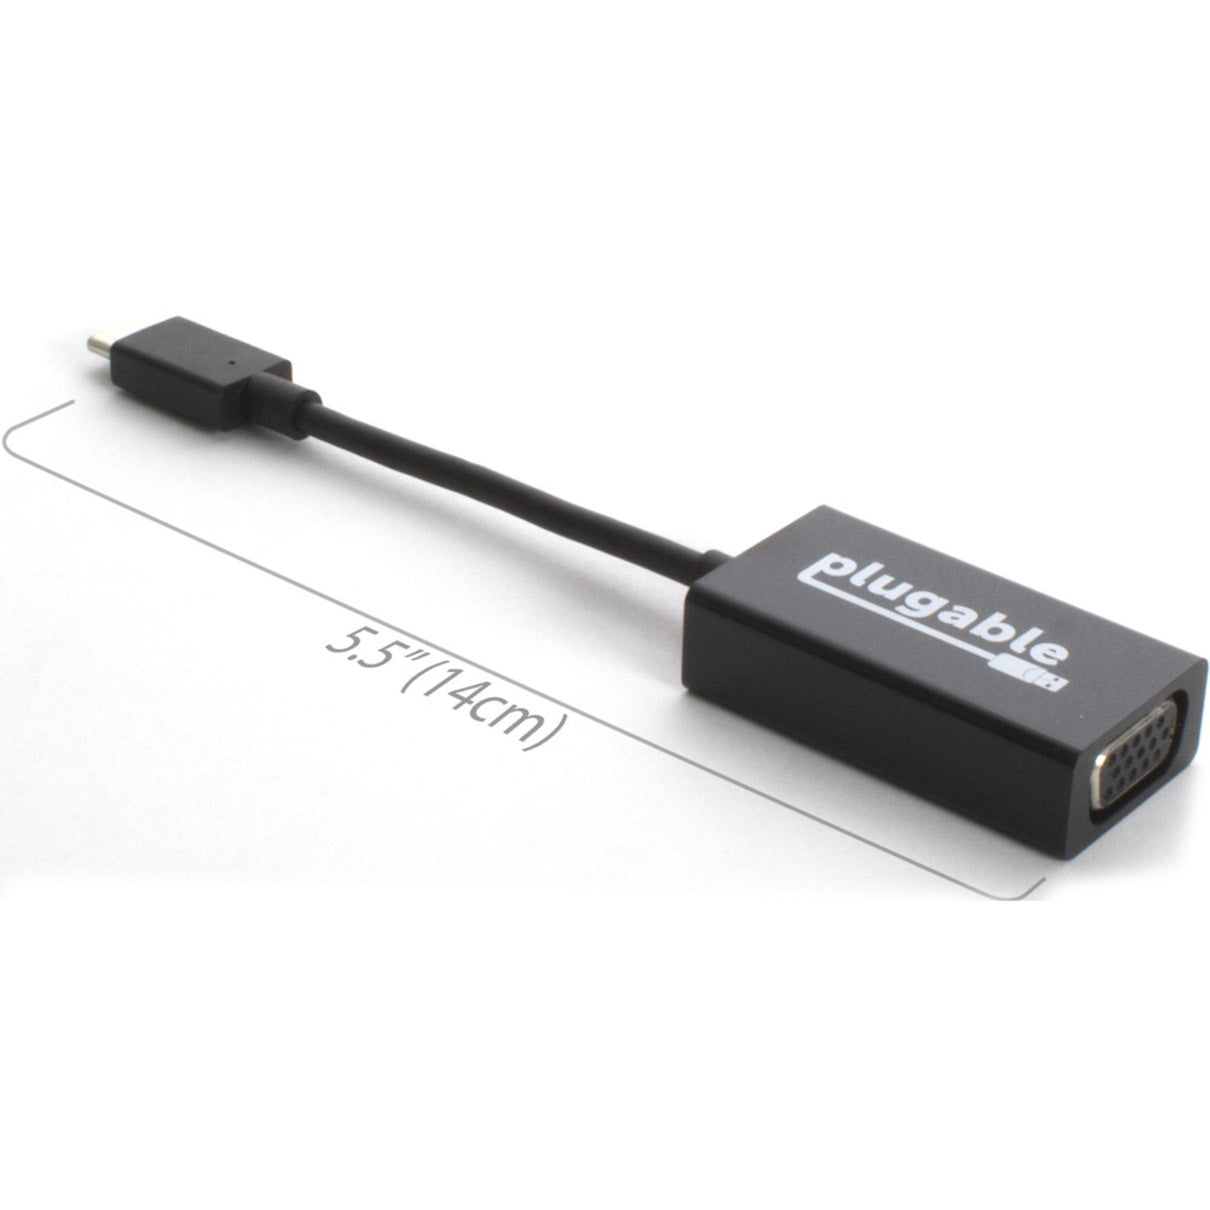 Plugable USBC-VGA USB 3.1 Type-C to VGA Adapter, Plug and Play, 1920 x 1200 Maximum Resolution Supported